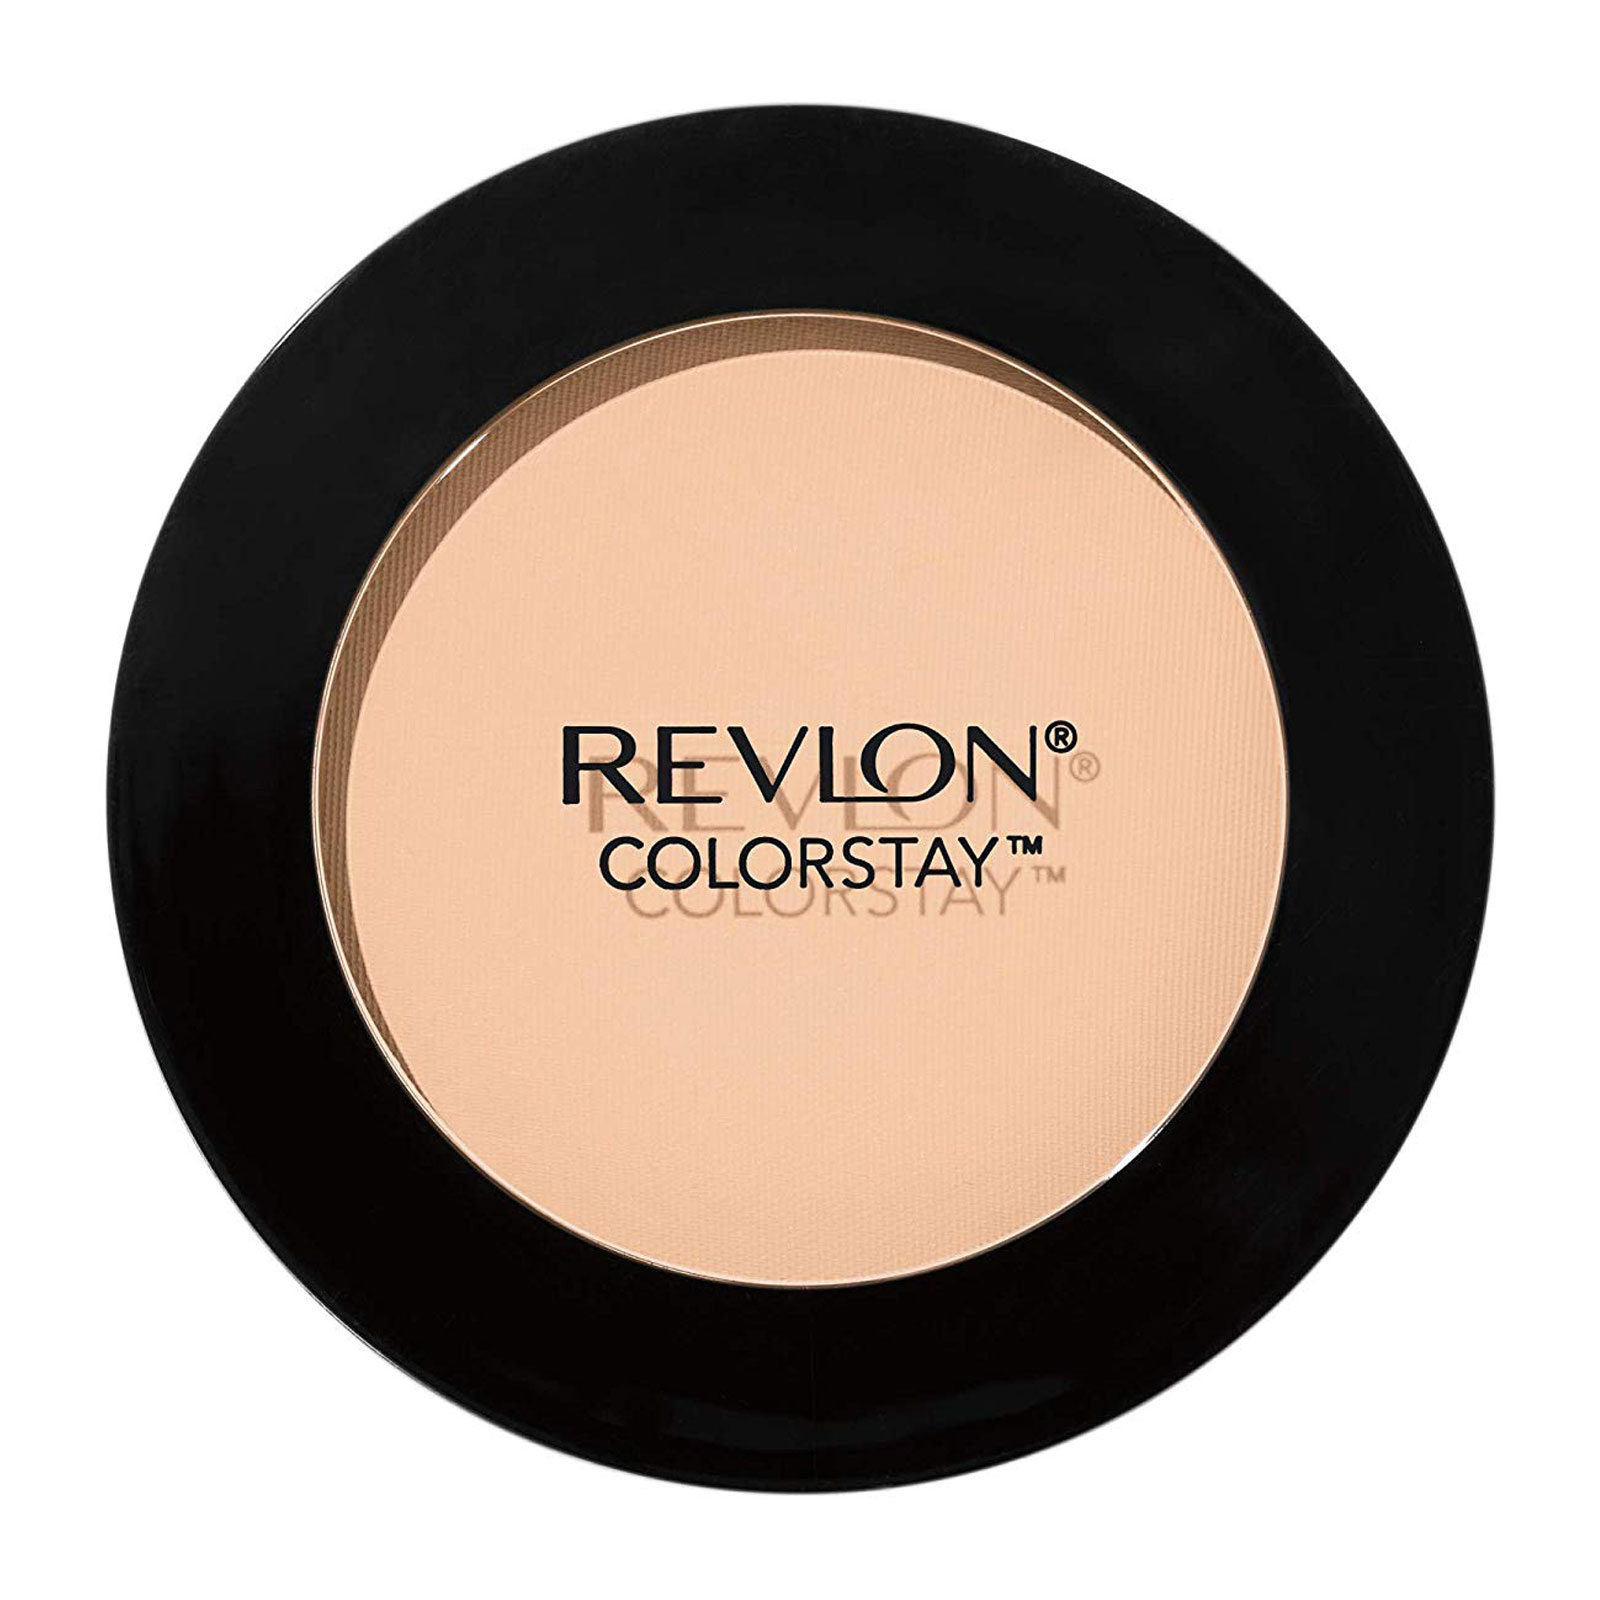 Revlon Colorstay Pressed Powder 8.4G 830